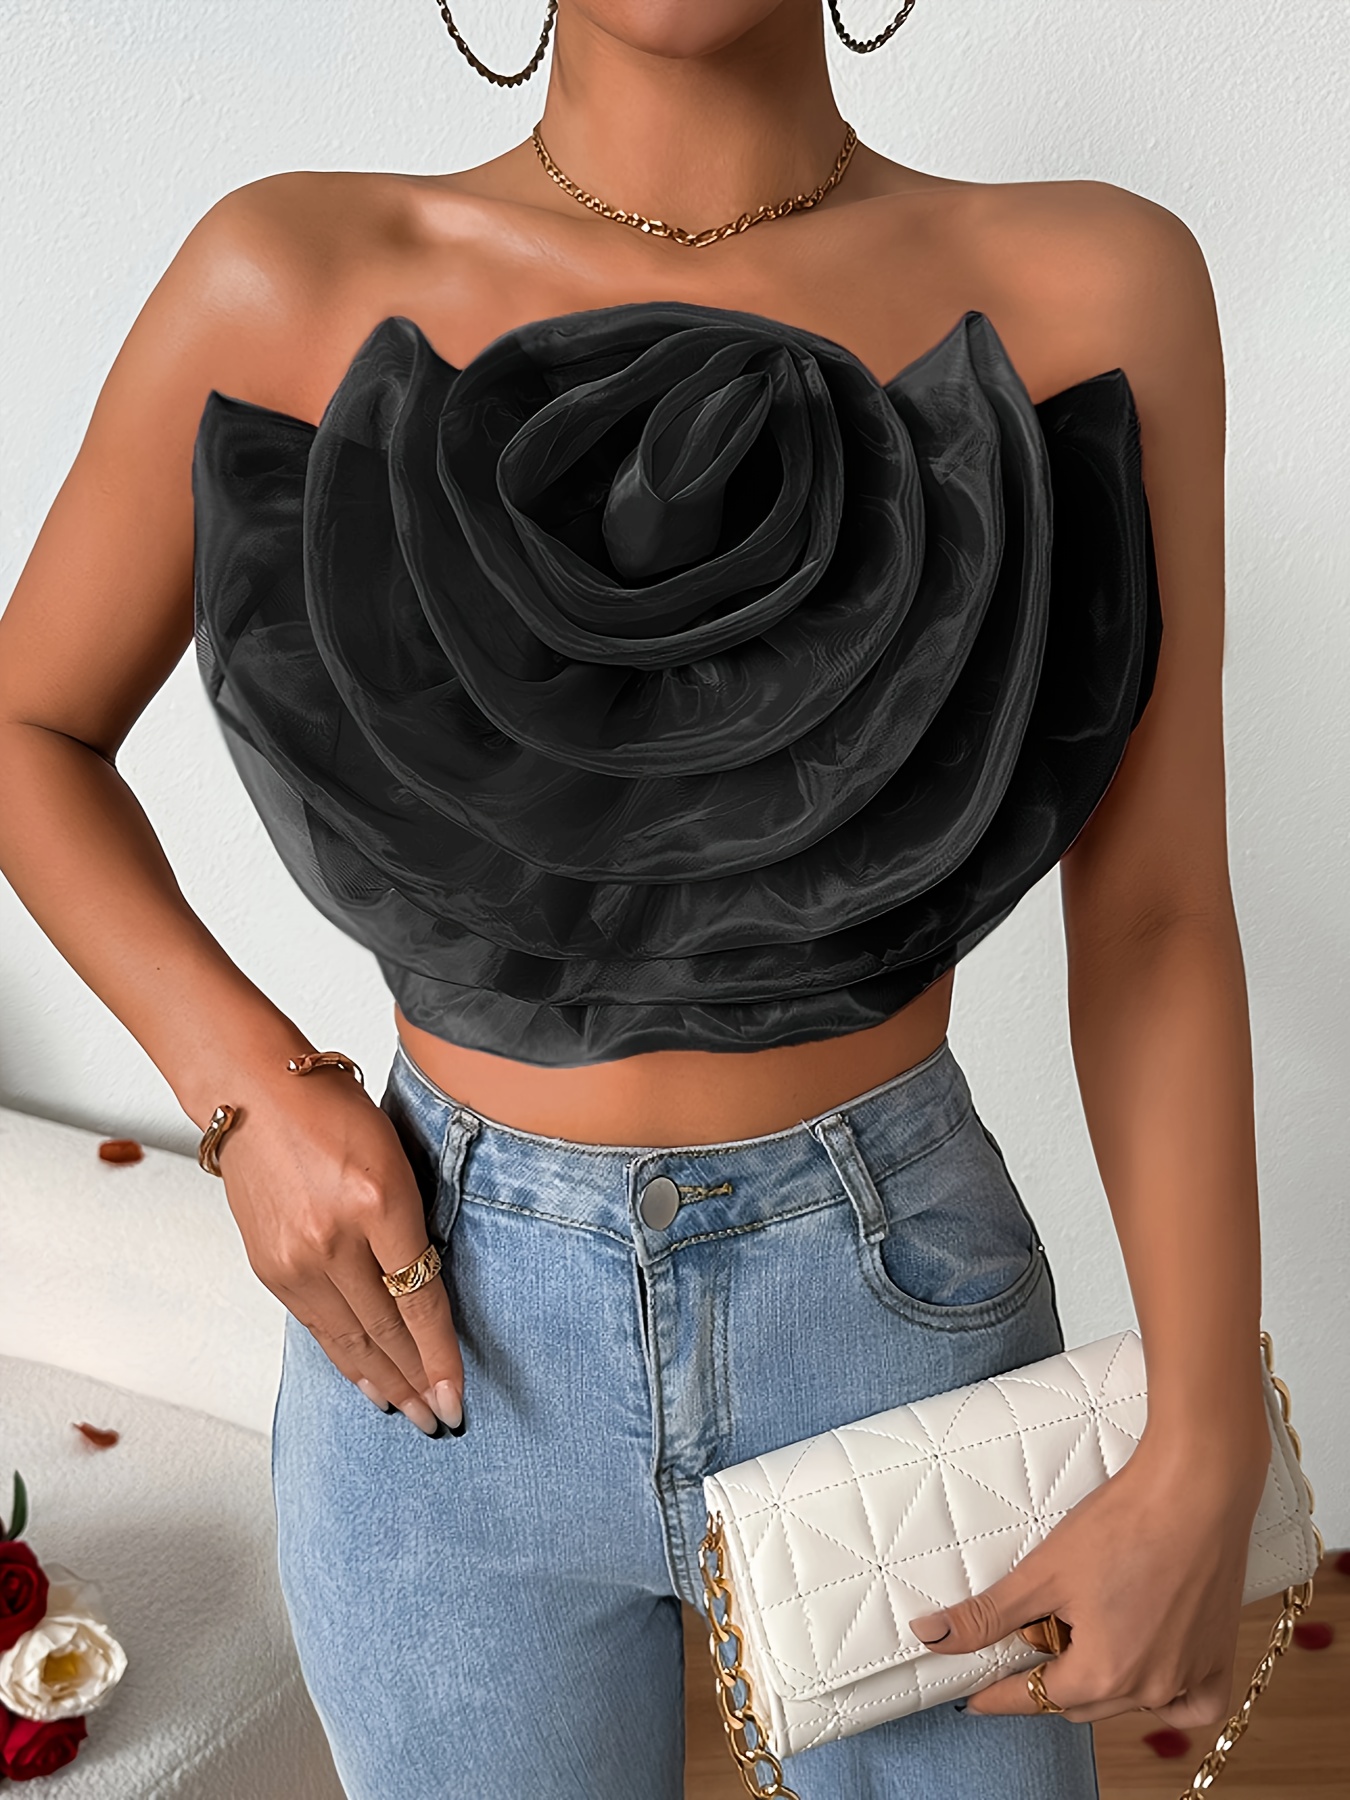 Black Floral Print Top - Strapless Crop Top - Tube Top - Tank Top